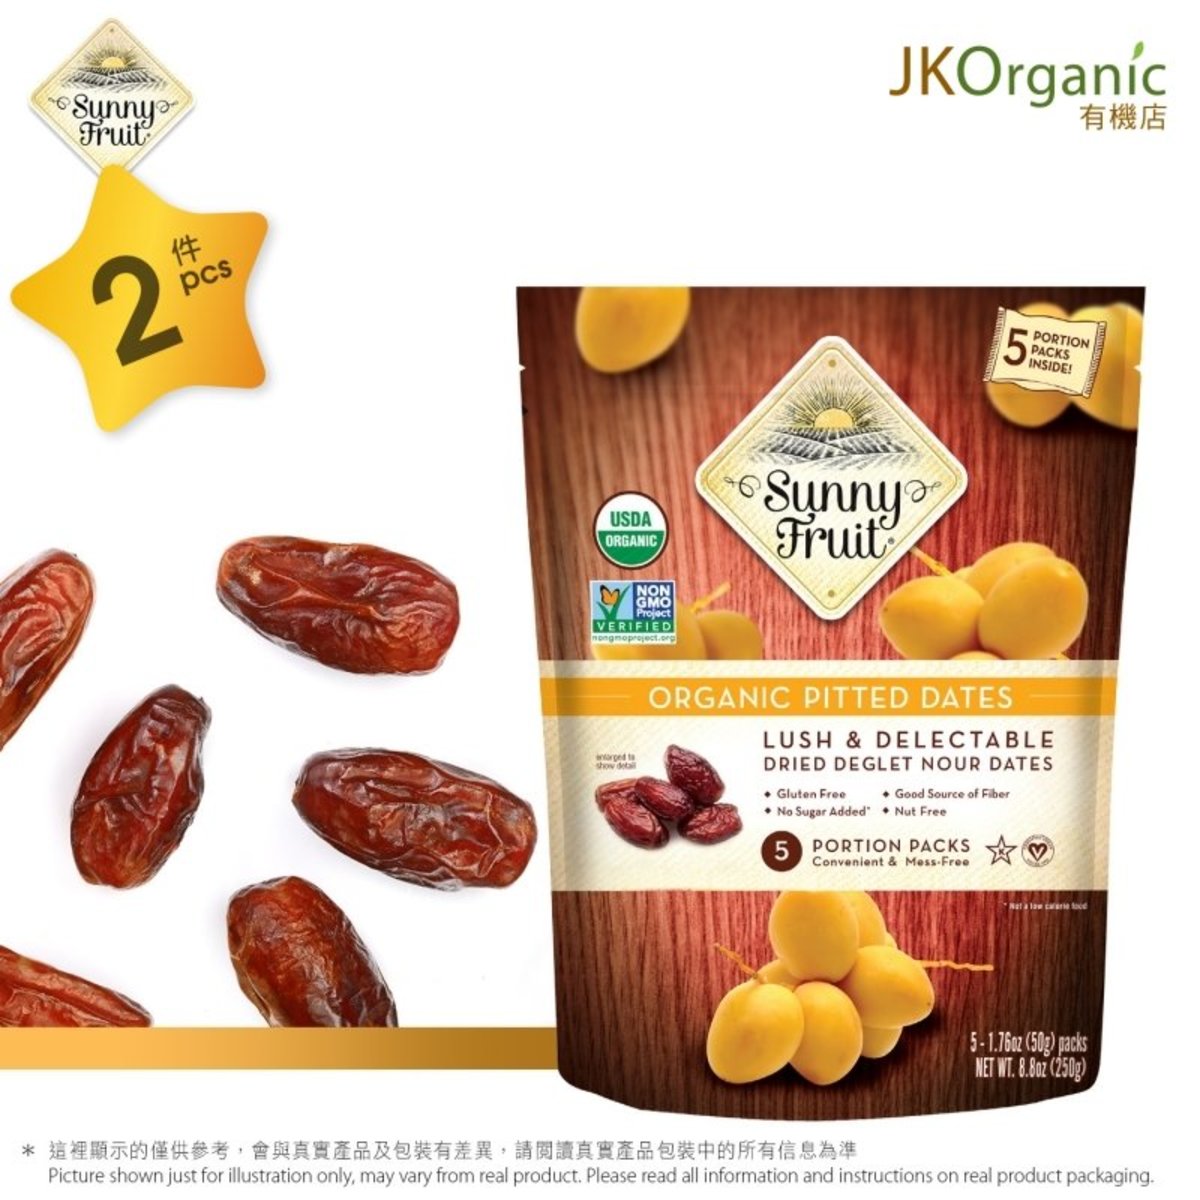 2包 - 有機椰棗乾(5小包裝) Organic Pitted Dates (5 Portion Packs) (250g x2)